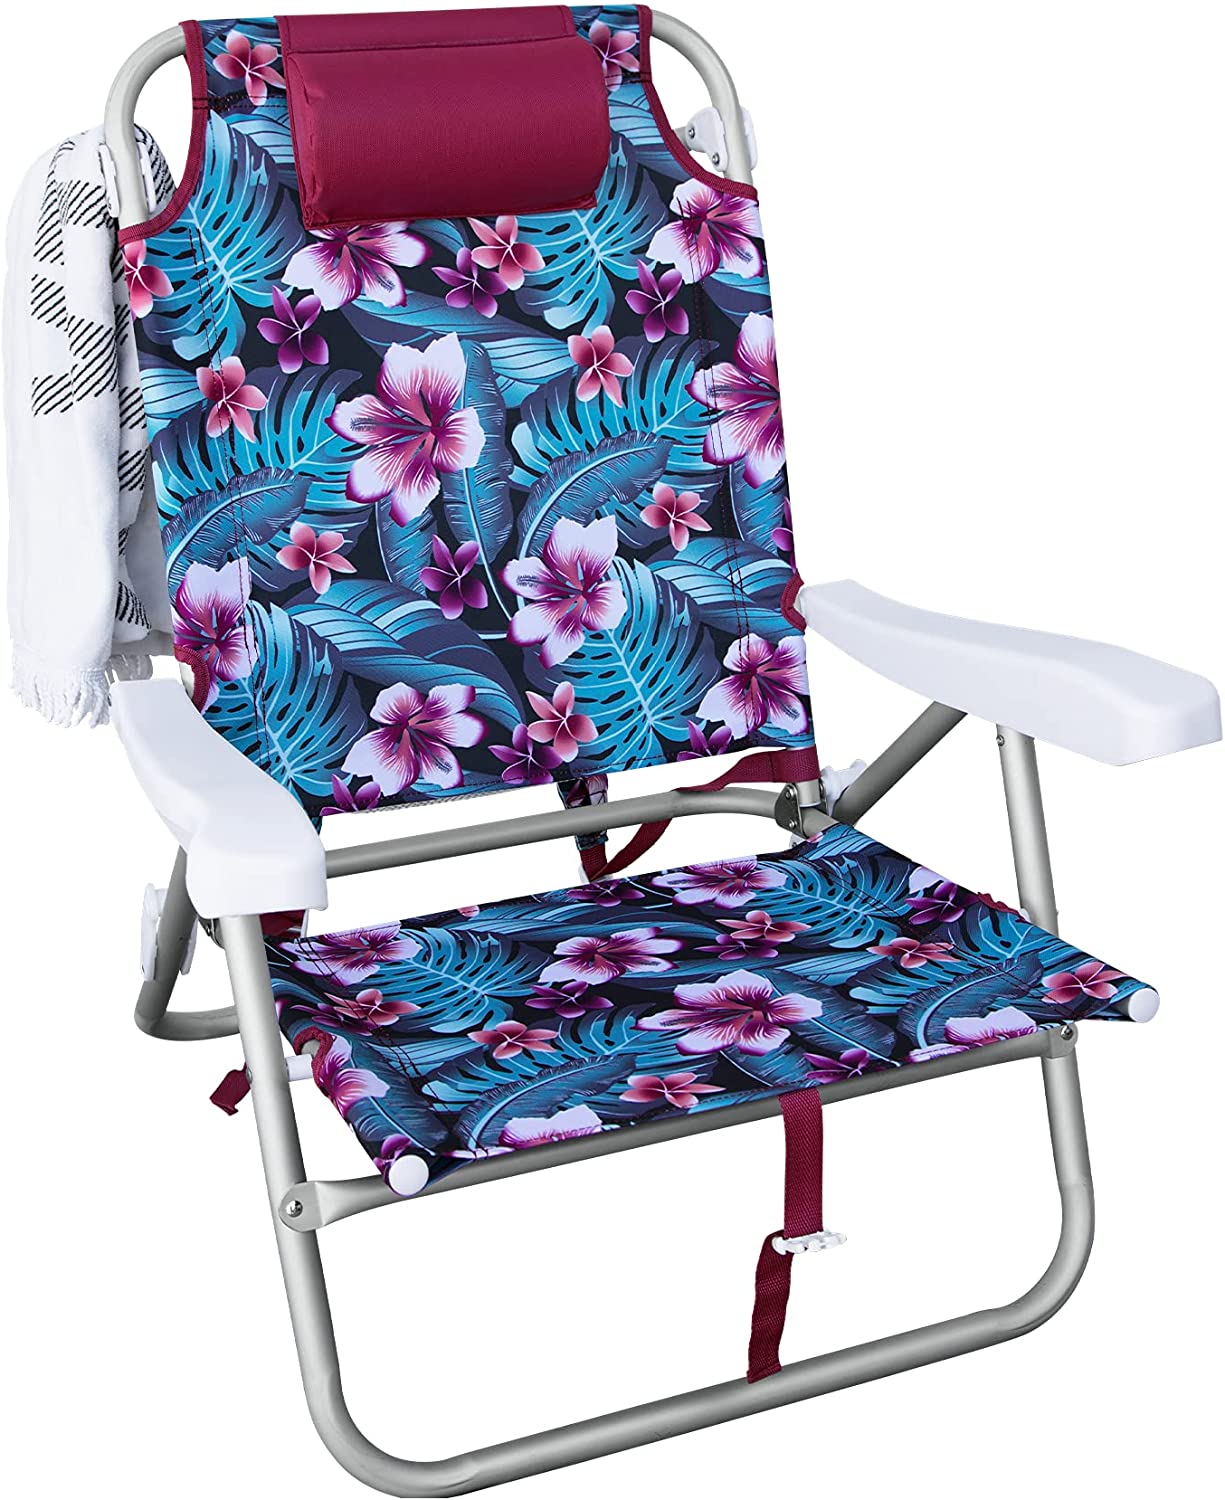 Hurley Backpack Beach Chair CabanaBlack